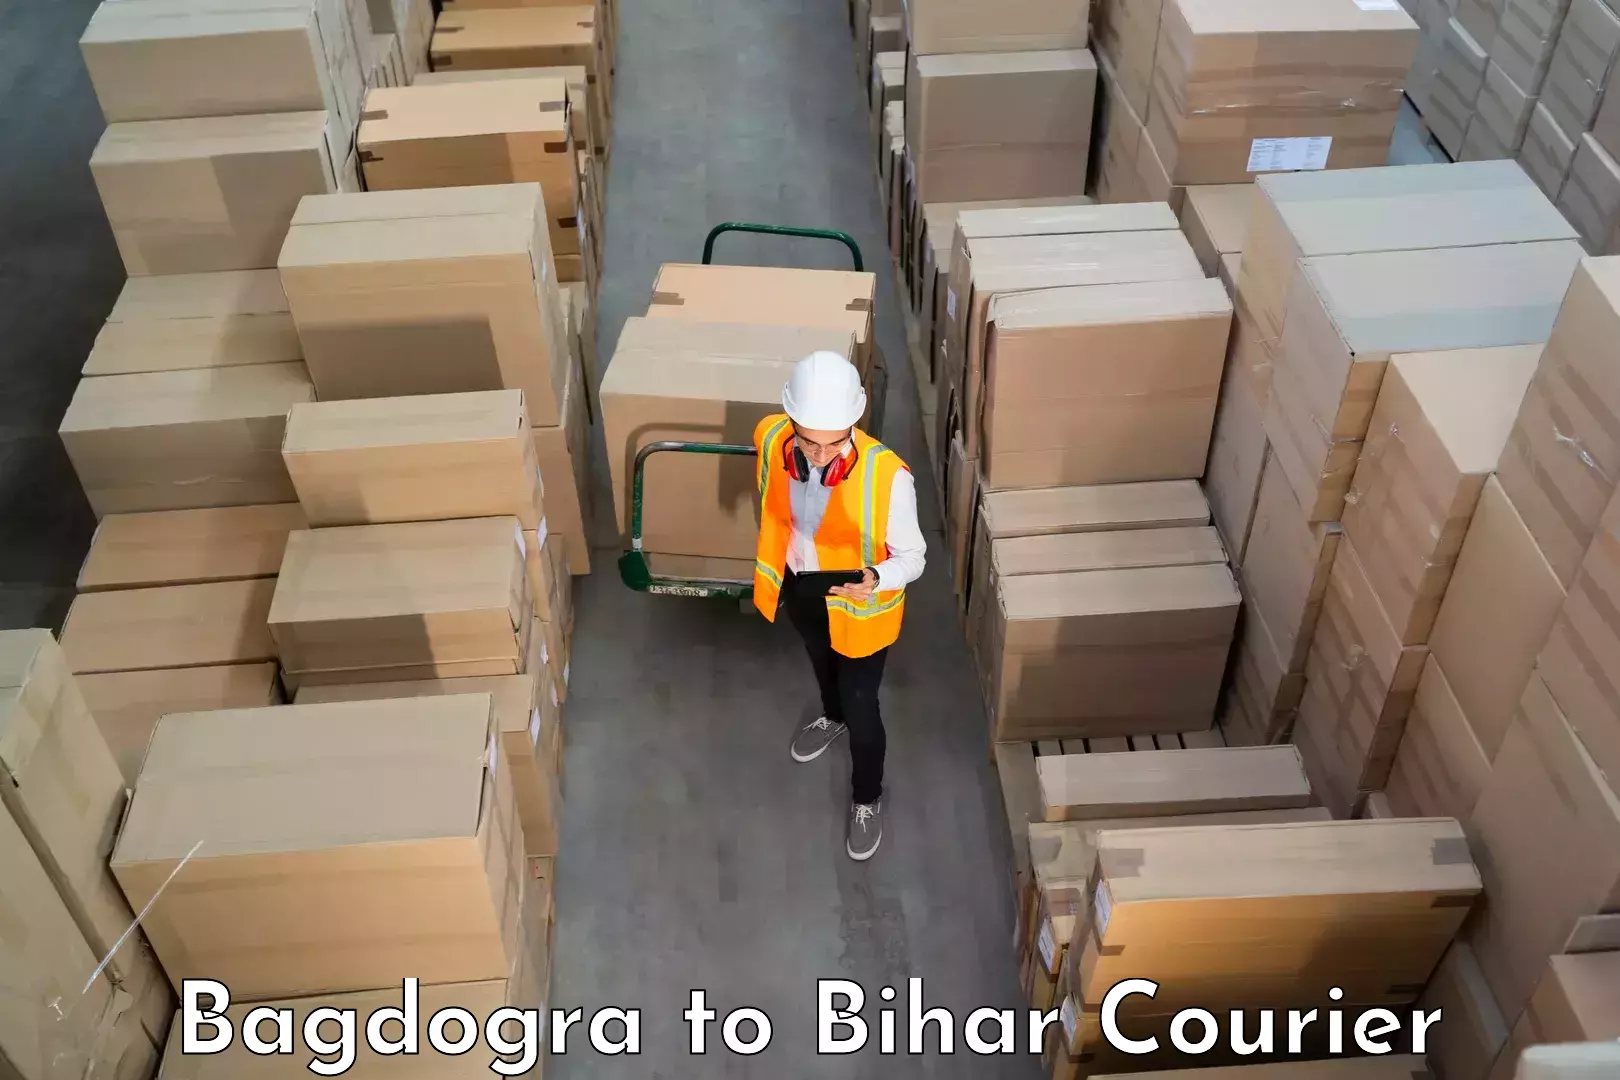 Professional moving company Bagdogra to Alamnagar